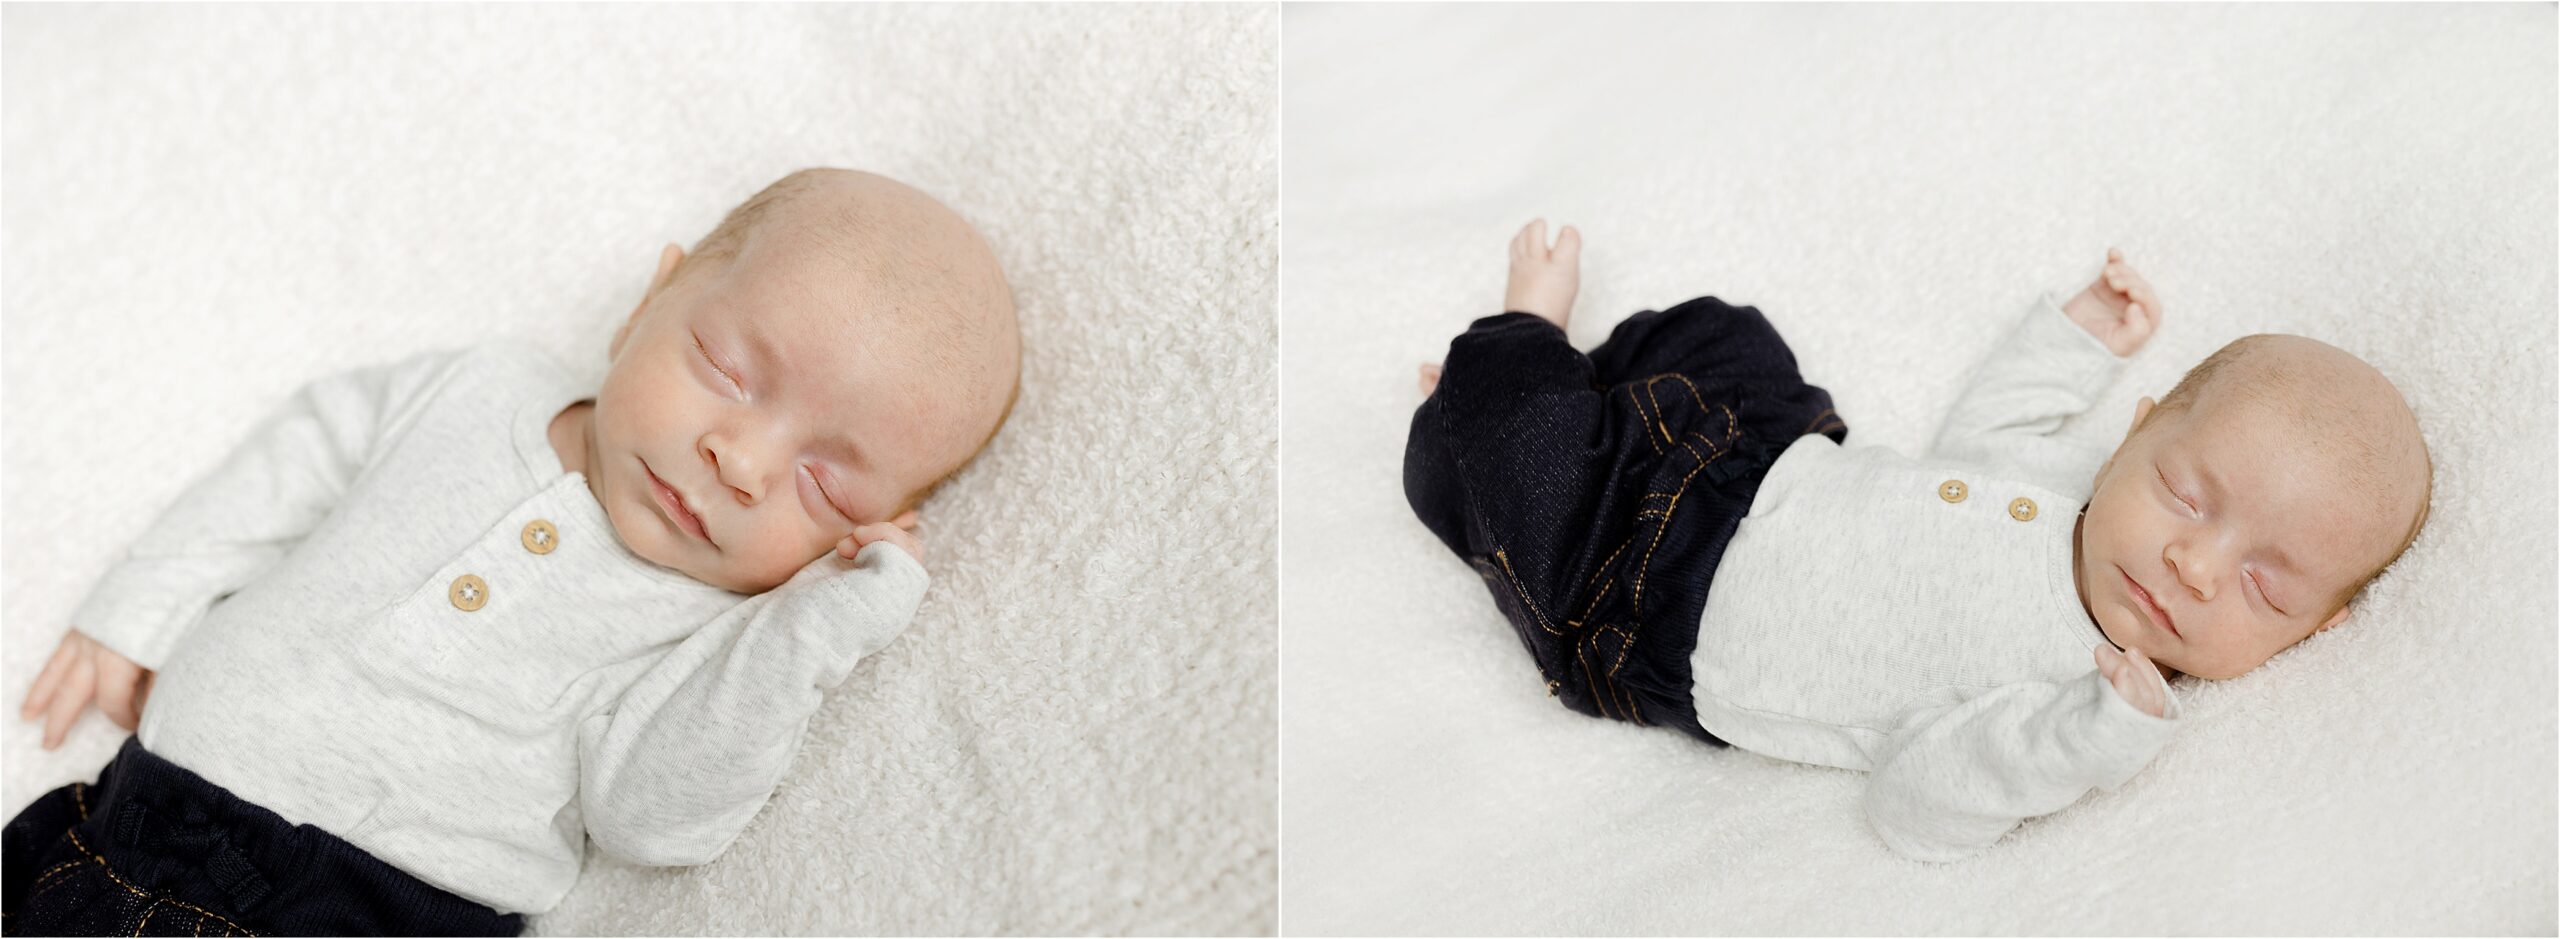 newborn photography in maryland